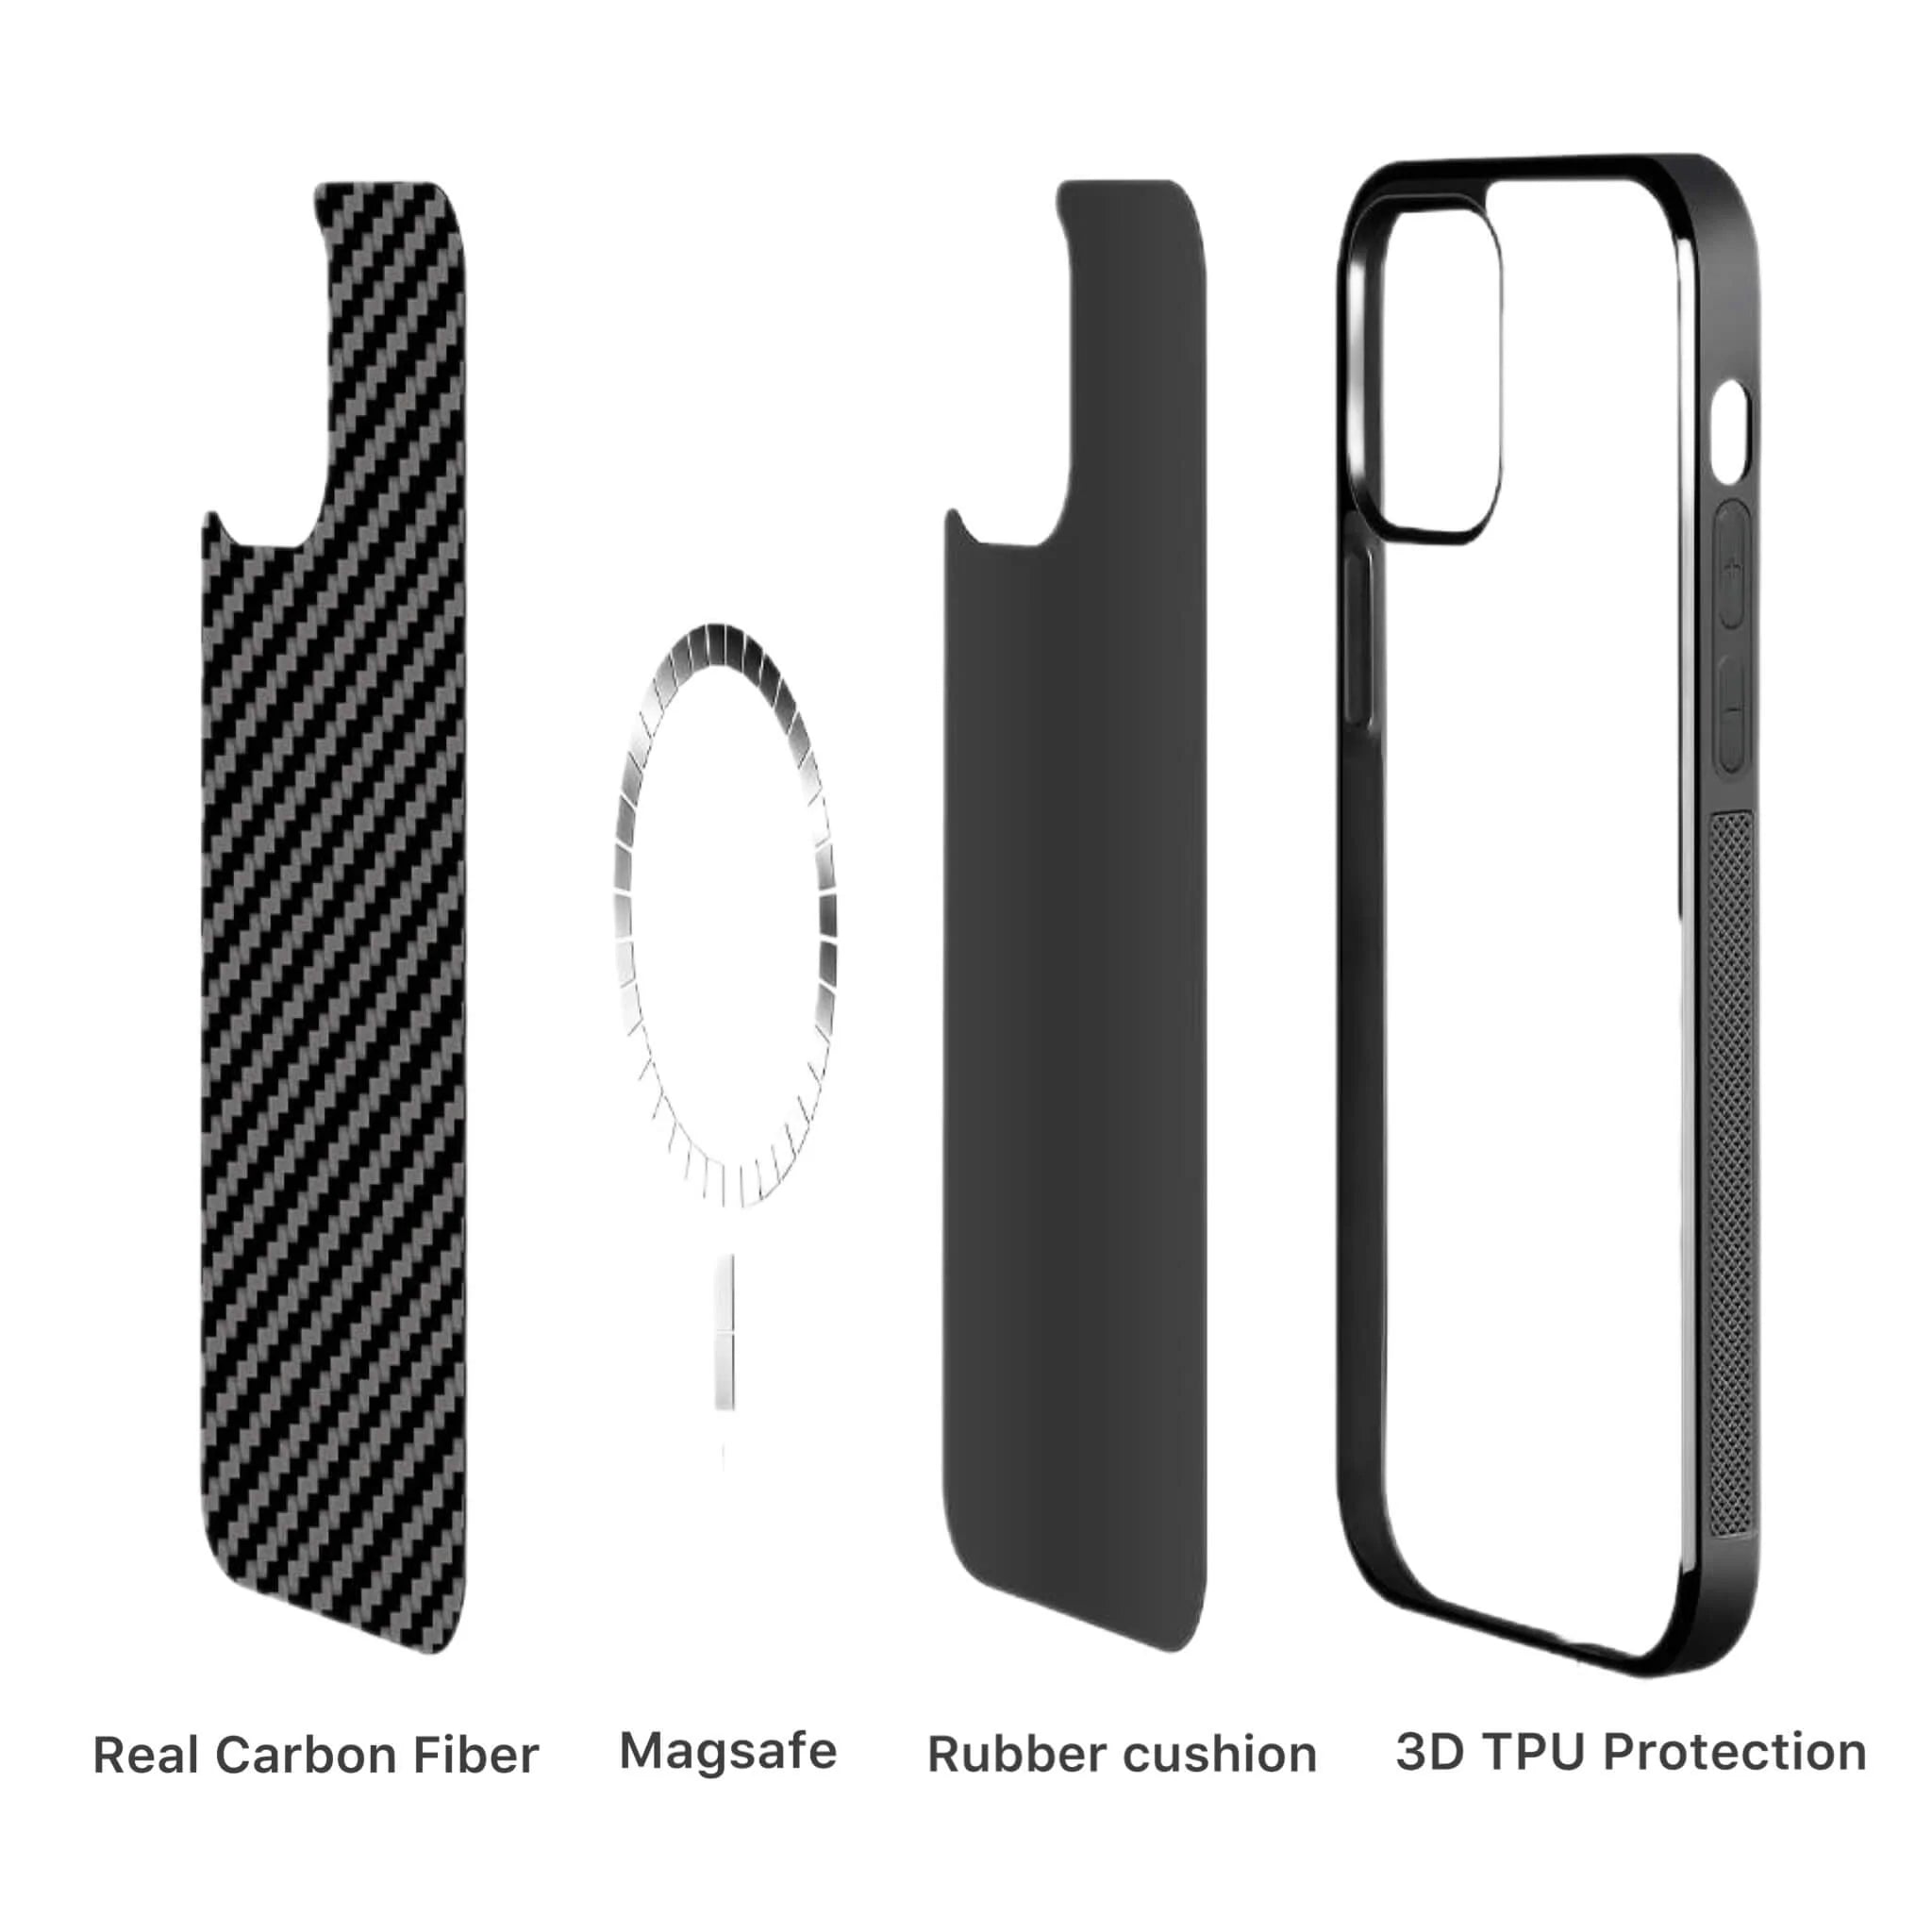 iPhone 12 Series Real Carbon Fiber Case